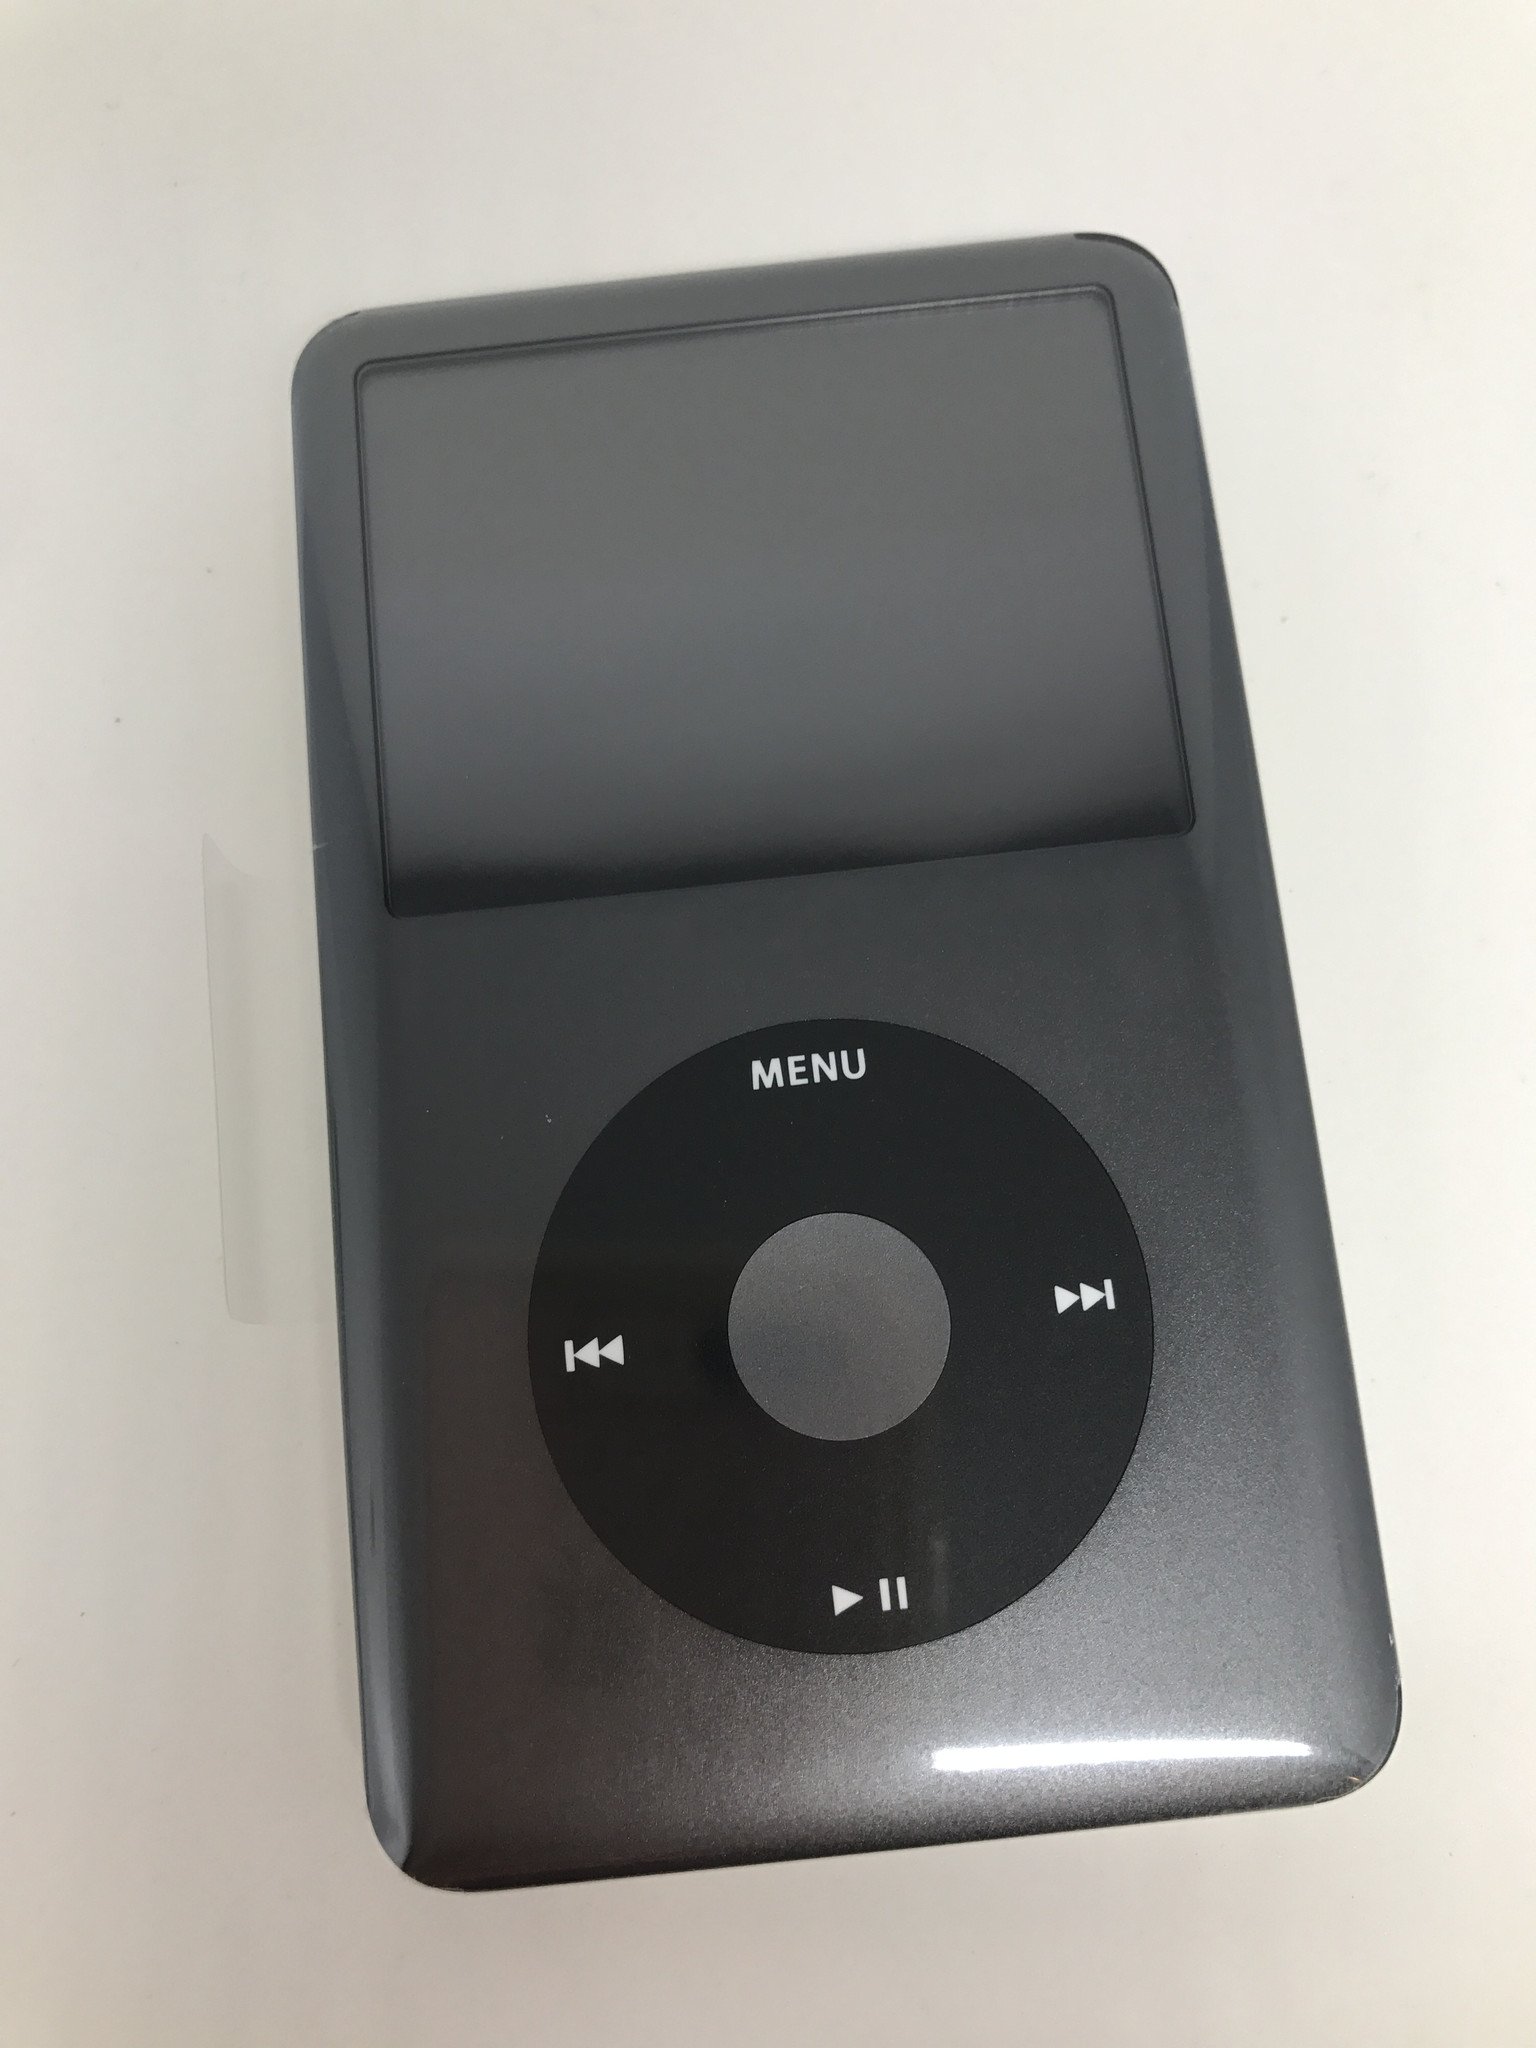 7th Generation 160GB iPod Classic Black-New in White Box, 90 Day ...